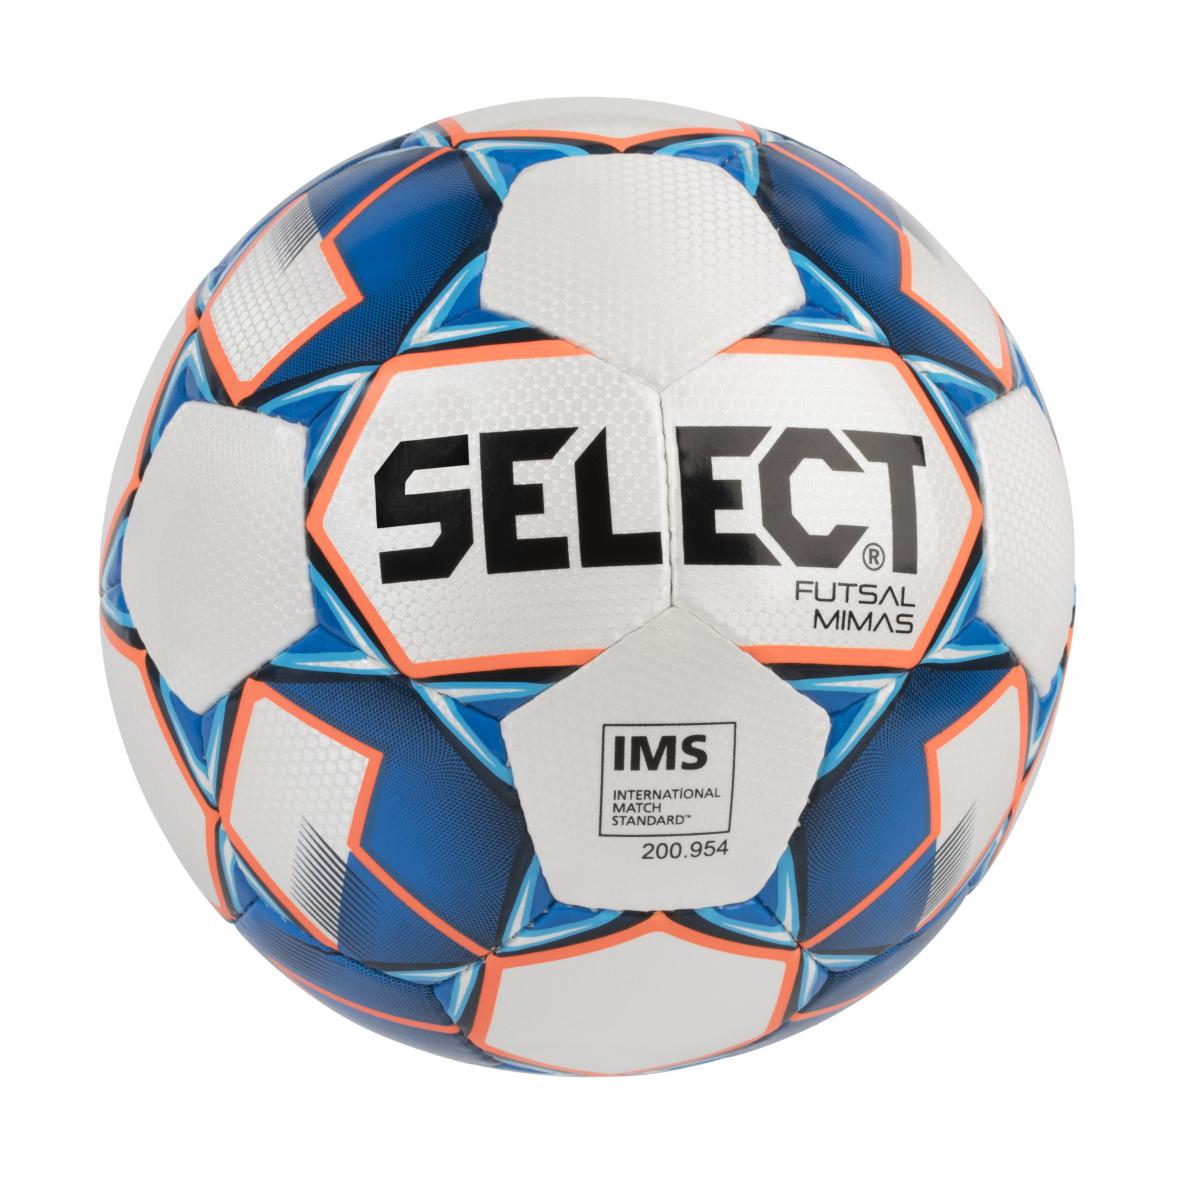 Select Futsal Mimas Fotball